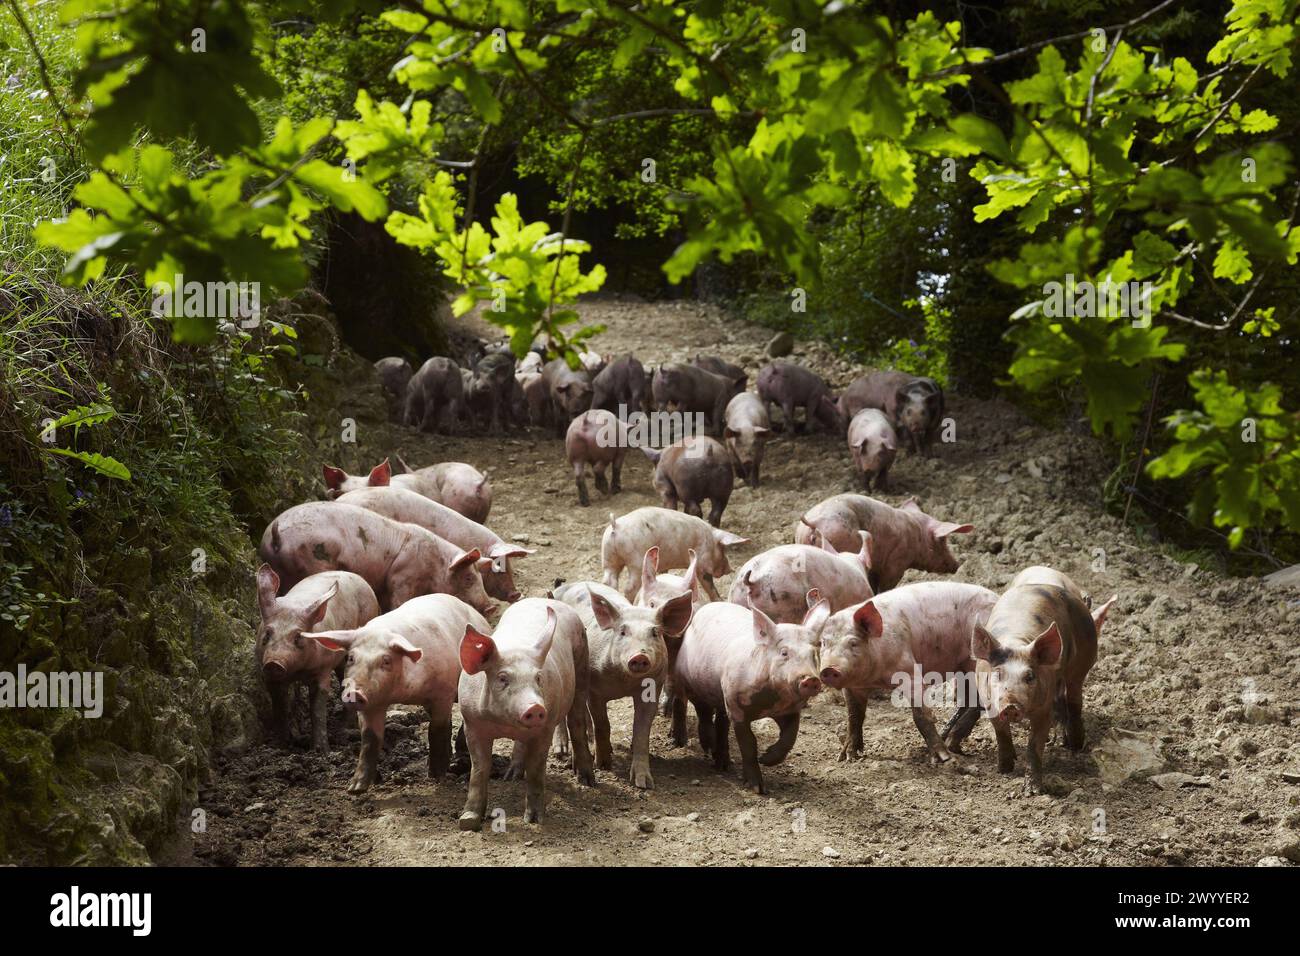 Pigs, Beizama, Guipuzcoa, Basque Country, Spain. Stock Photo